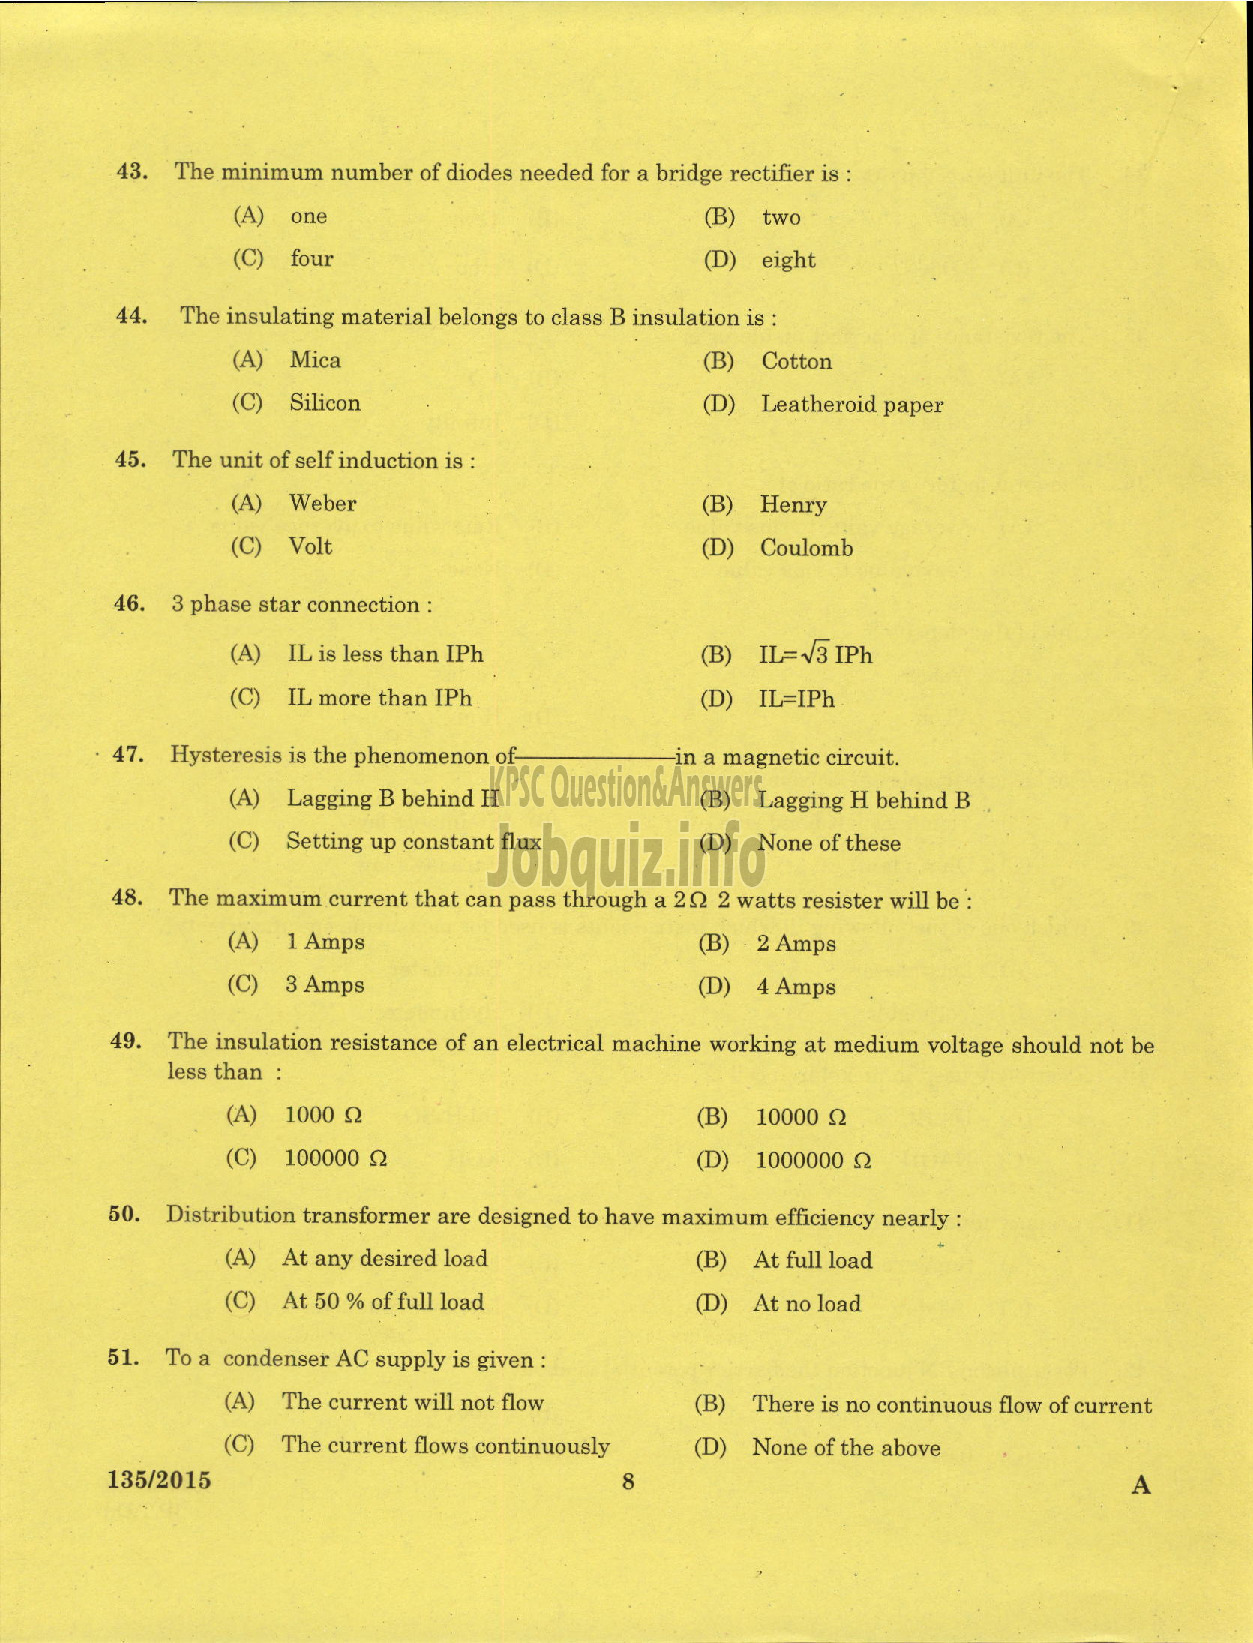 Kerala PSC Question Paper - ELECTRICIAN KSFDC LTD-6